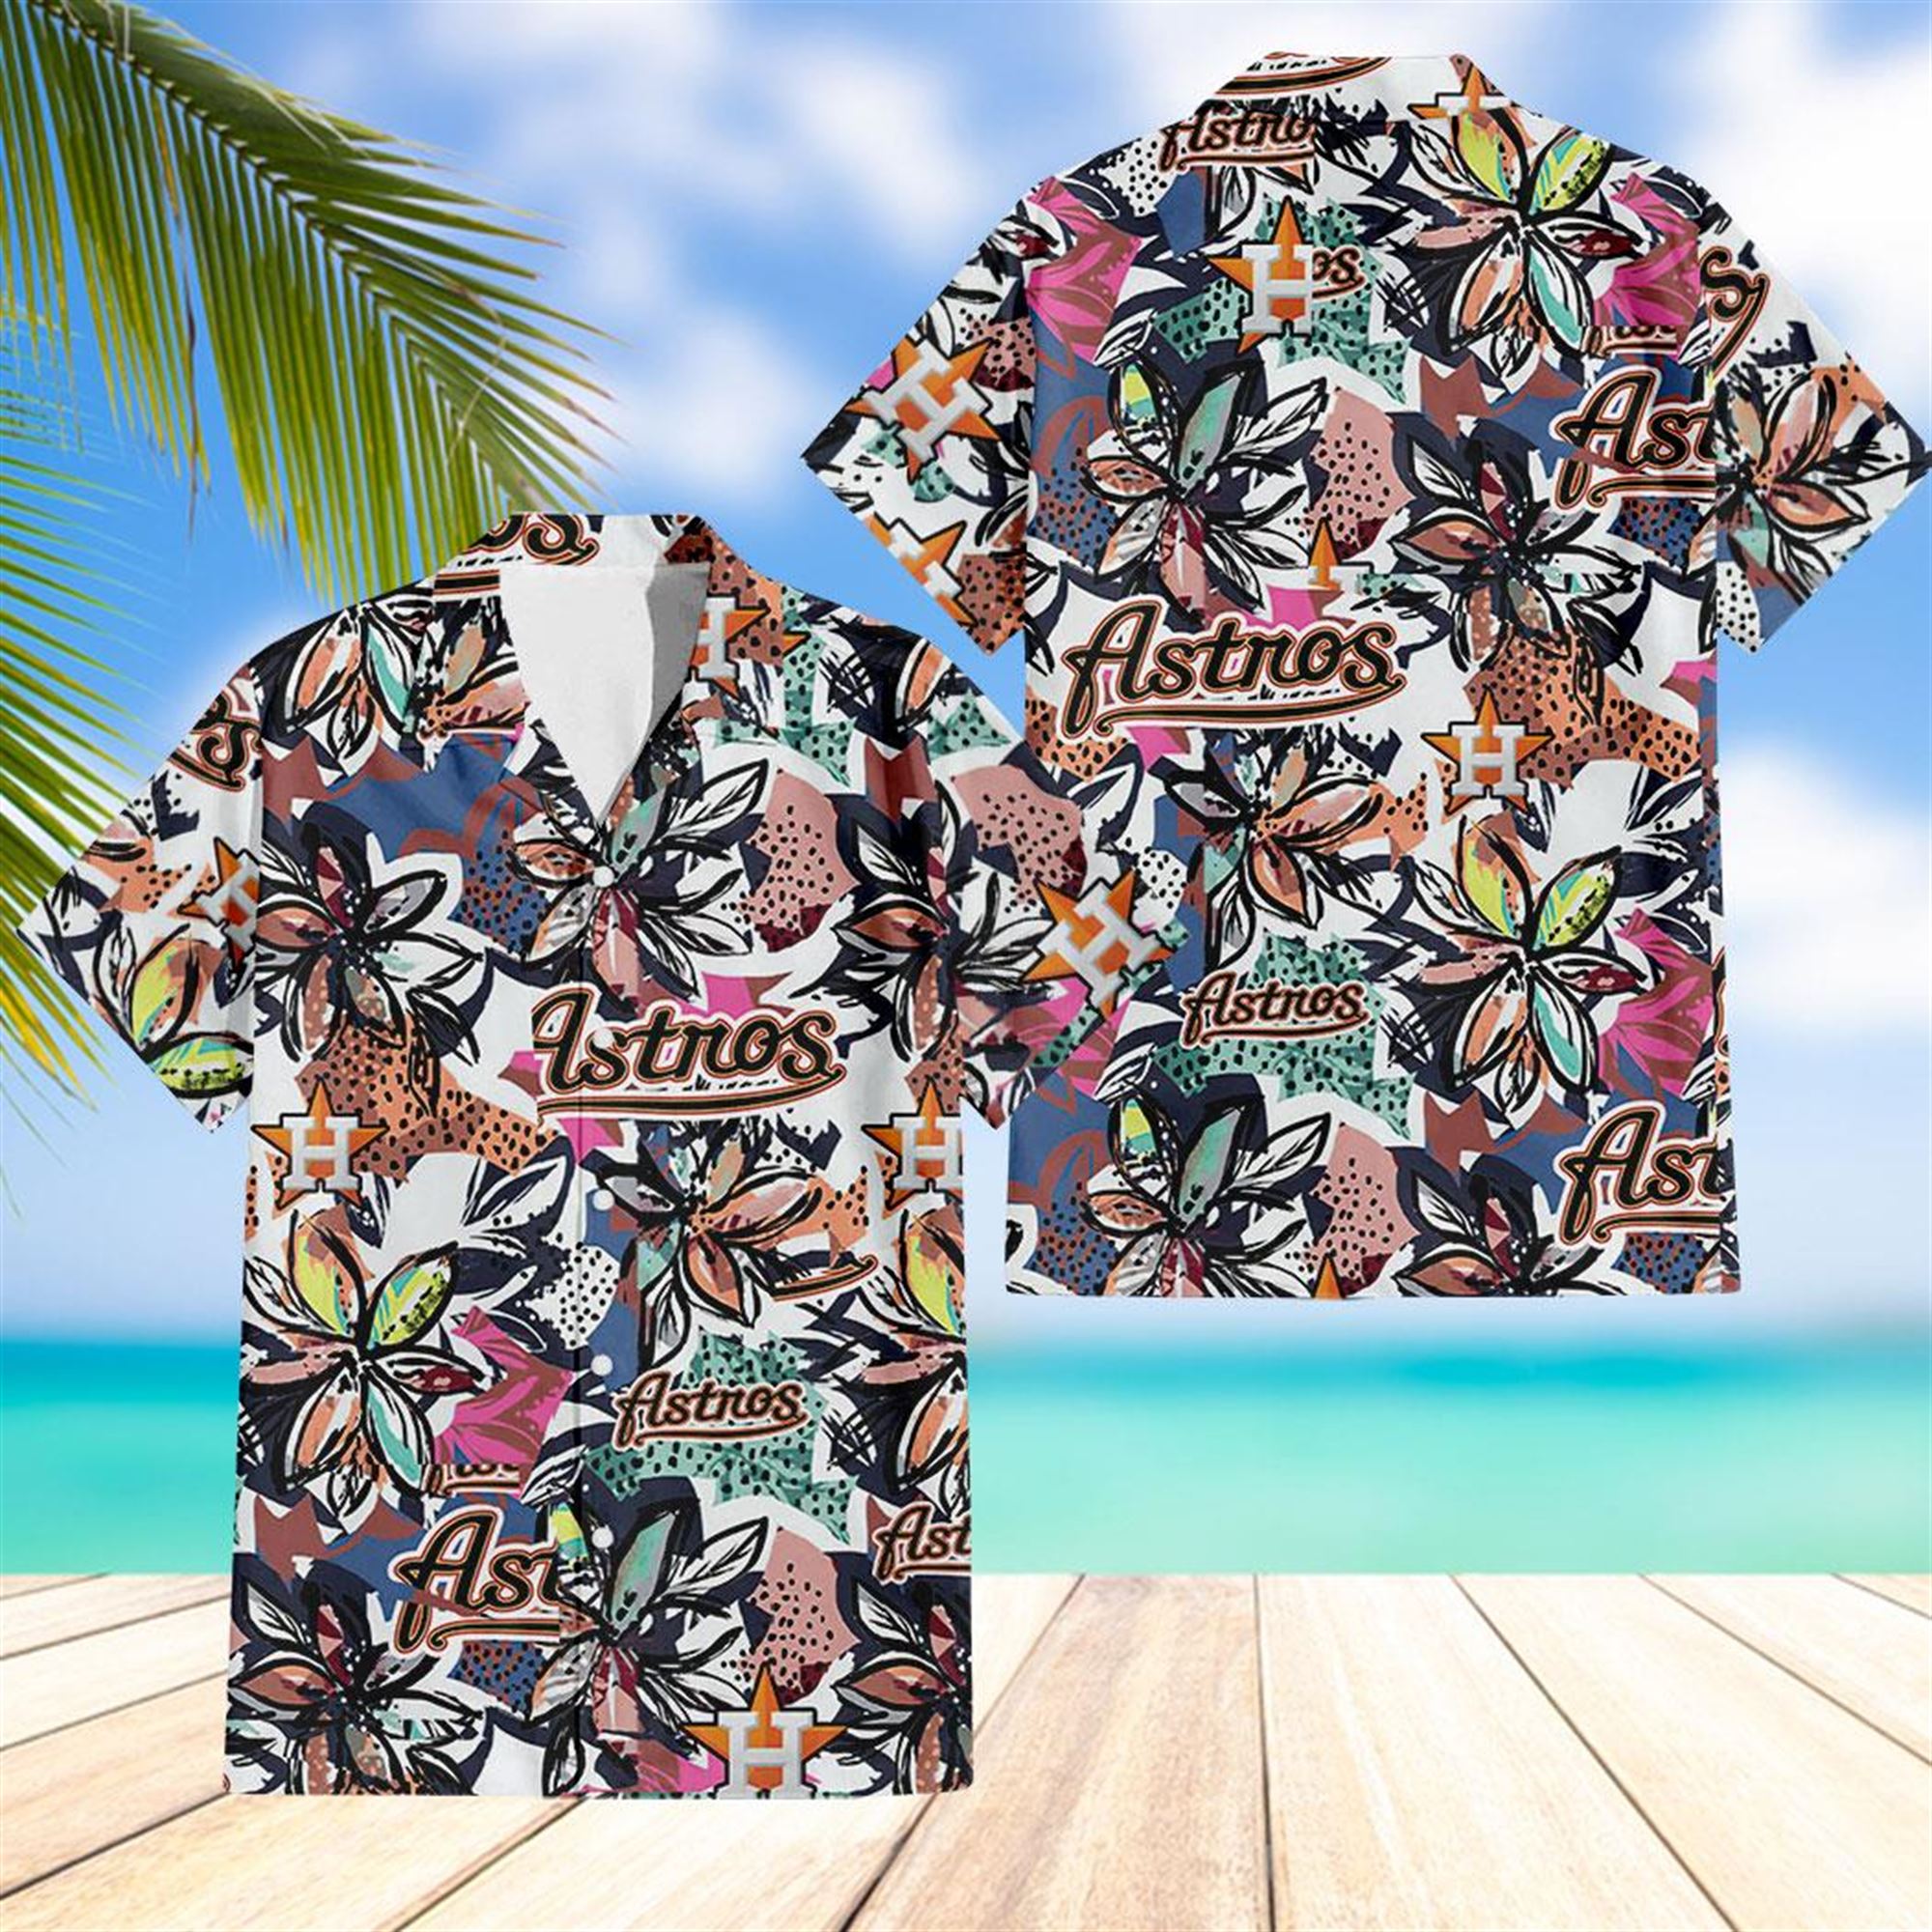 houston astros aloha shirt